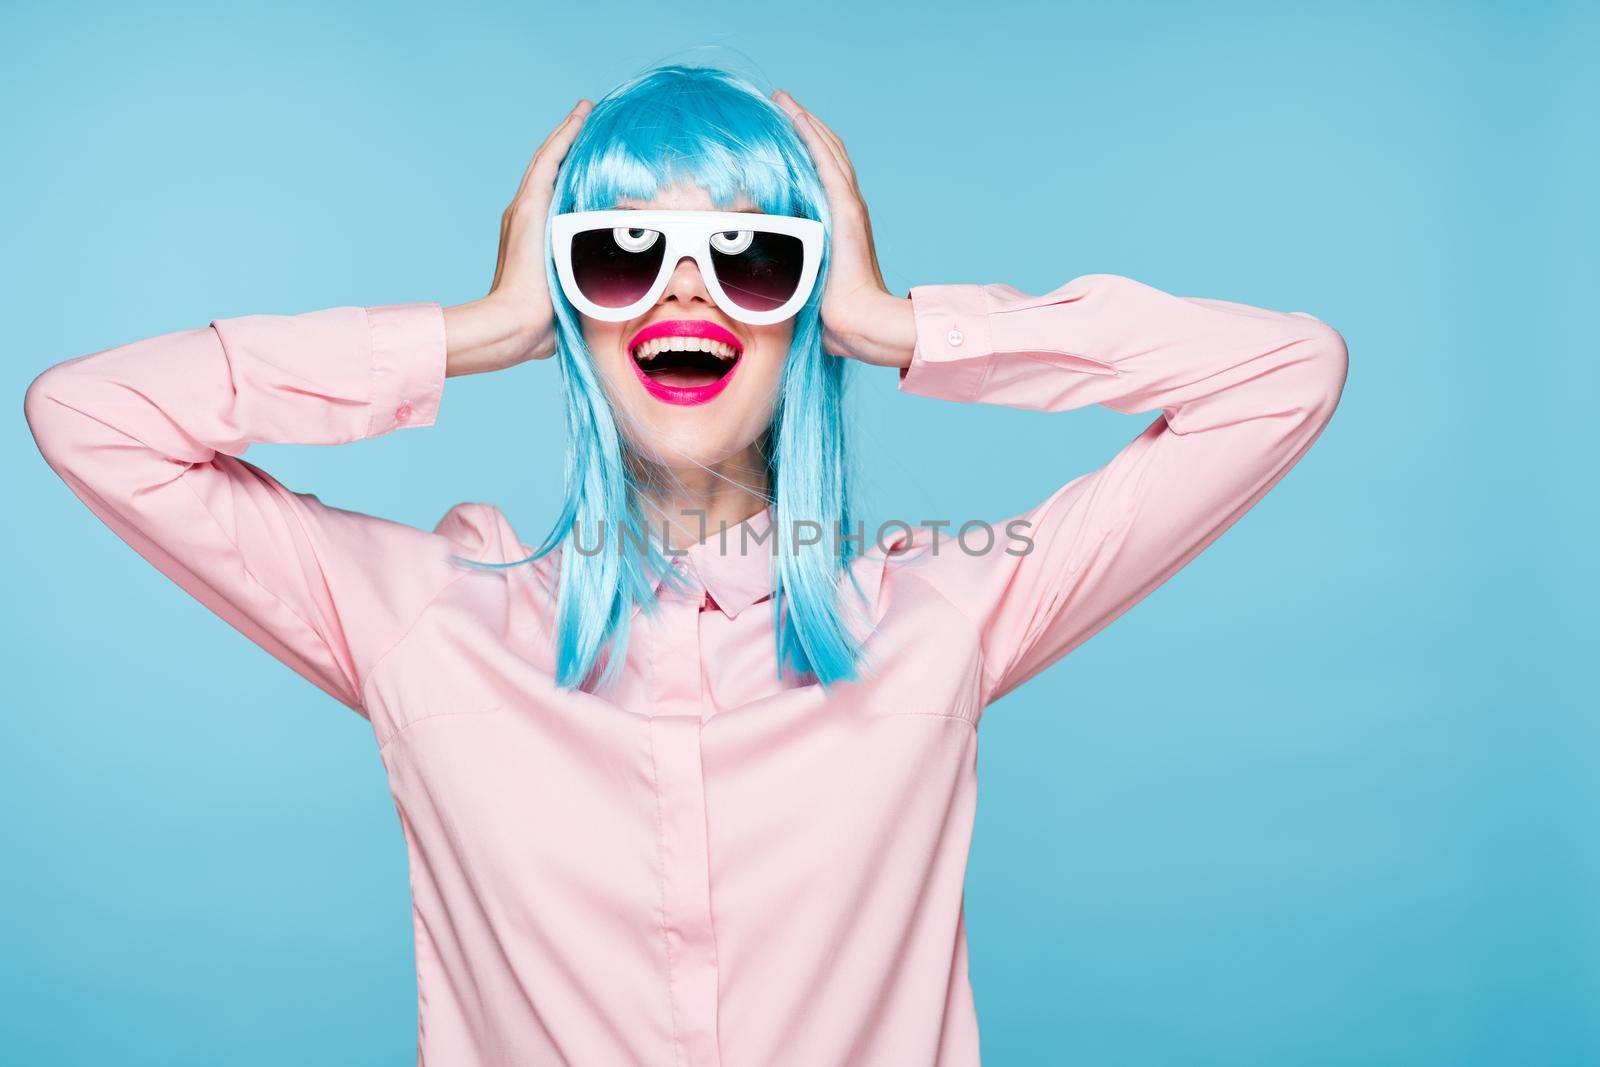 beautiful woman in blue wig sunglasses Glamor fashion. High quality photo